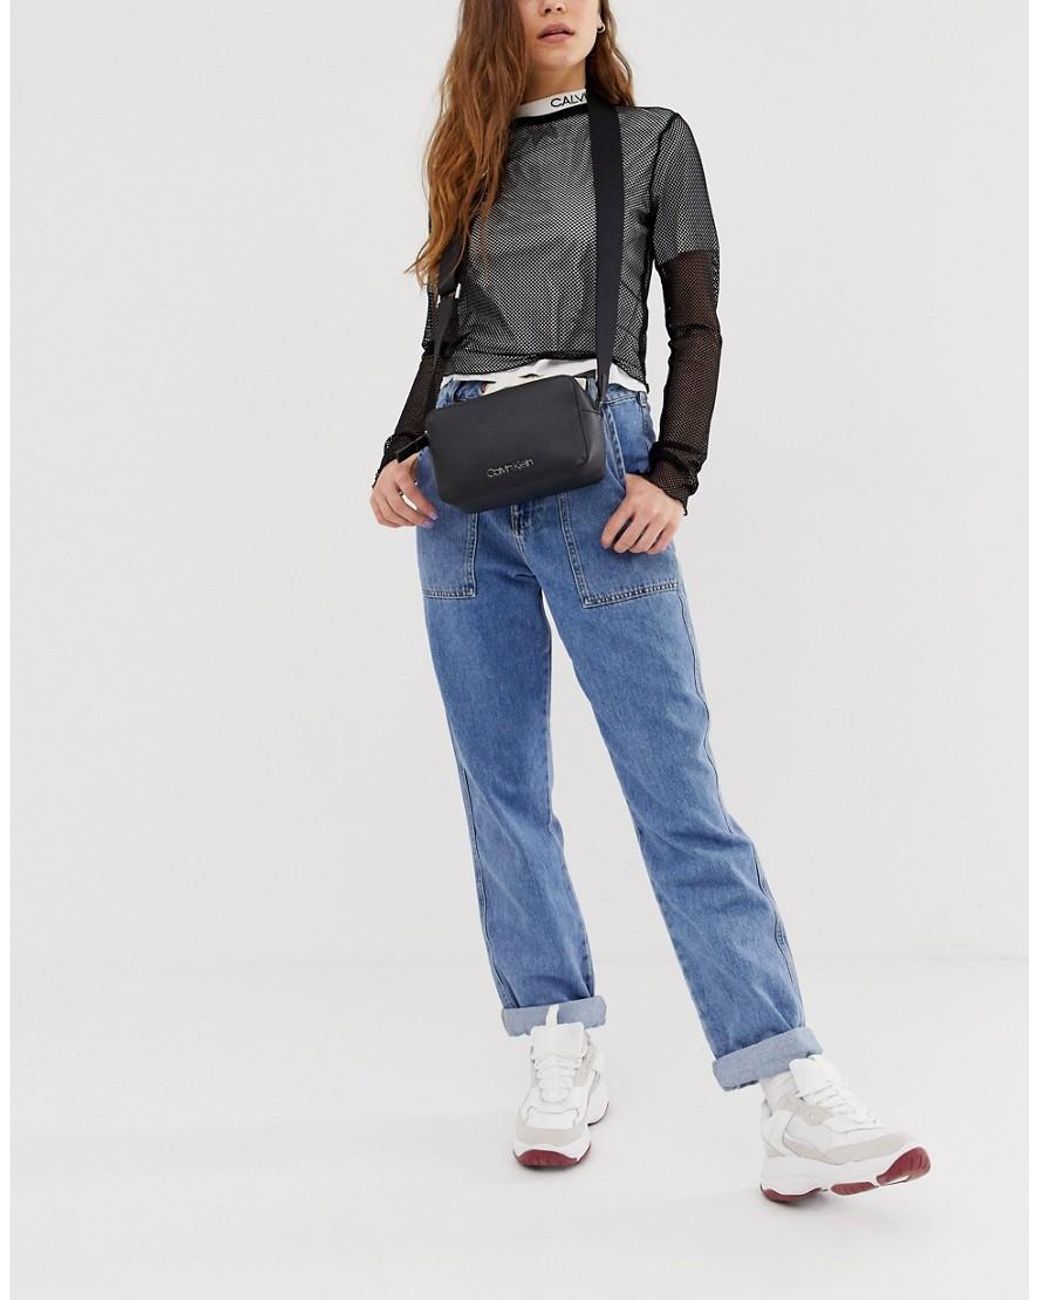 Calvin Klein Calvin Klein Camera Bag With Wide Print Detail Strap in Black  | Lyst Australia